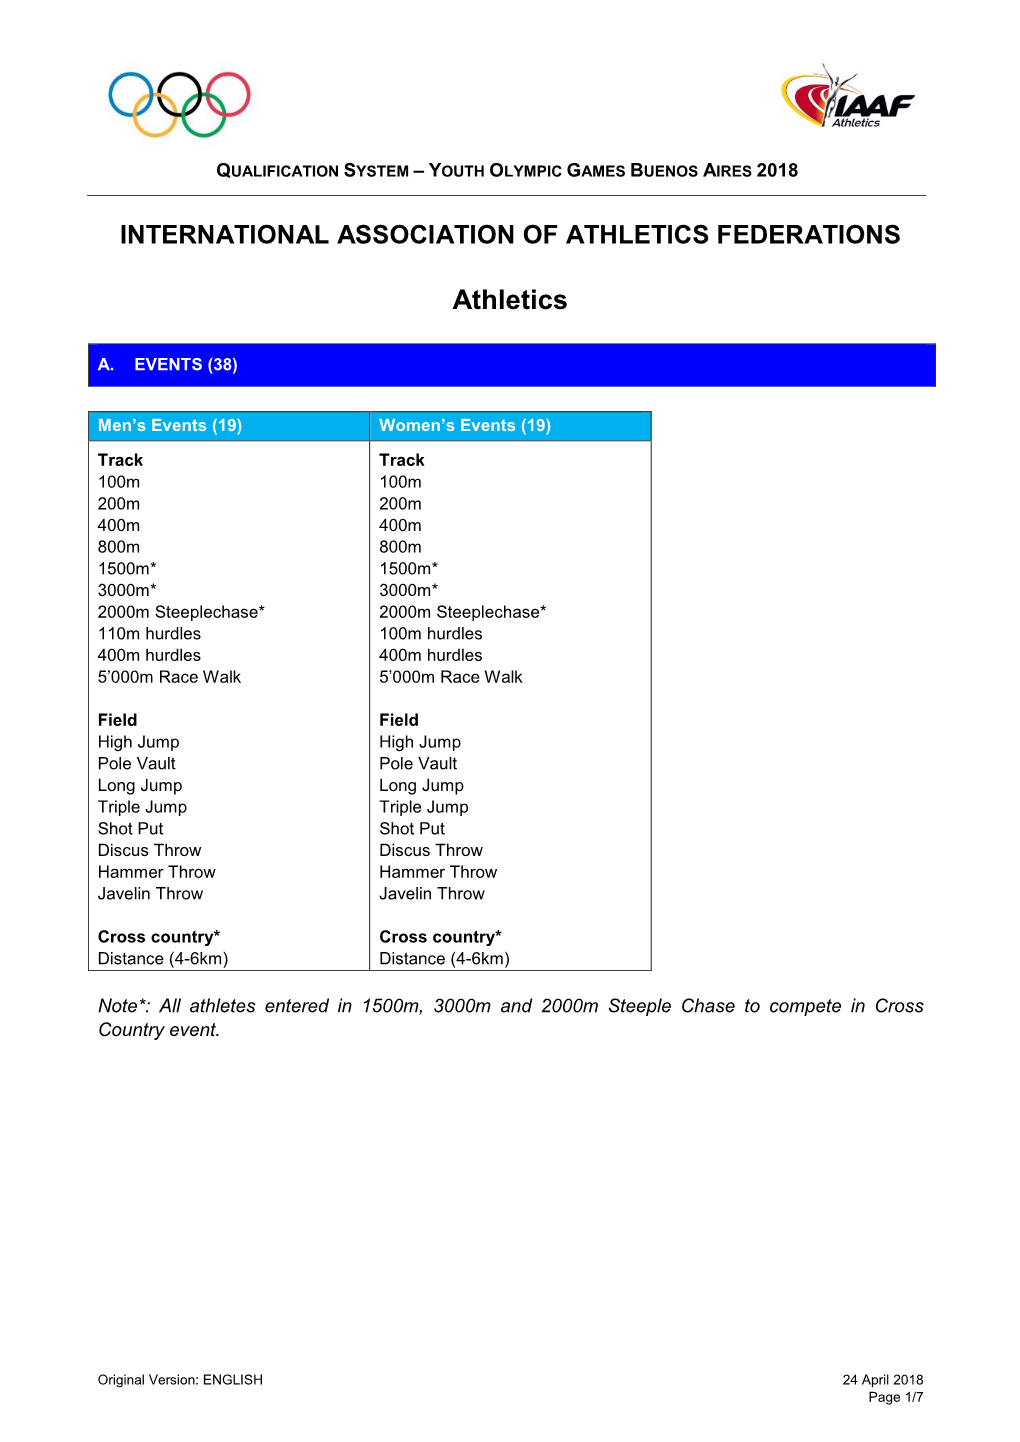 Athletics Federations